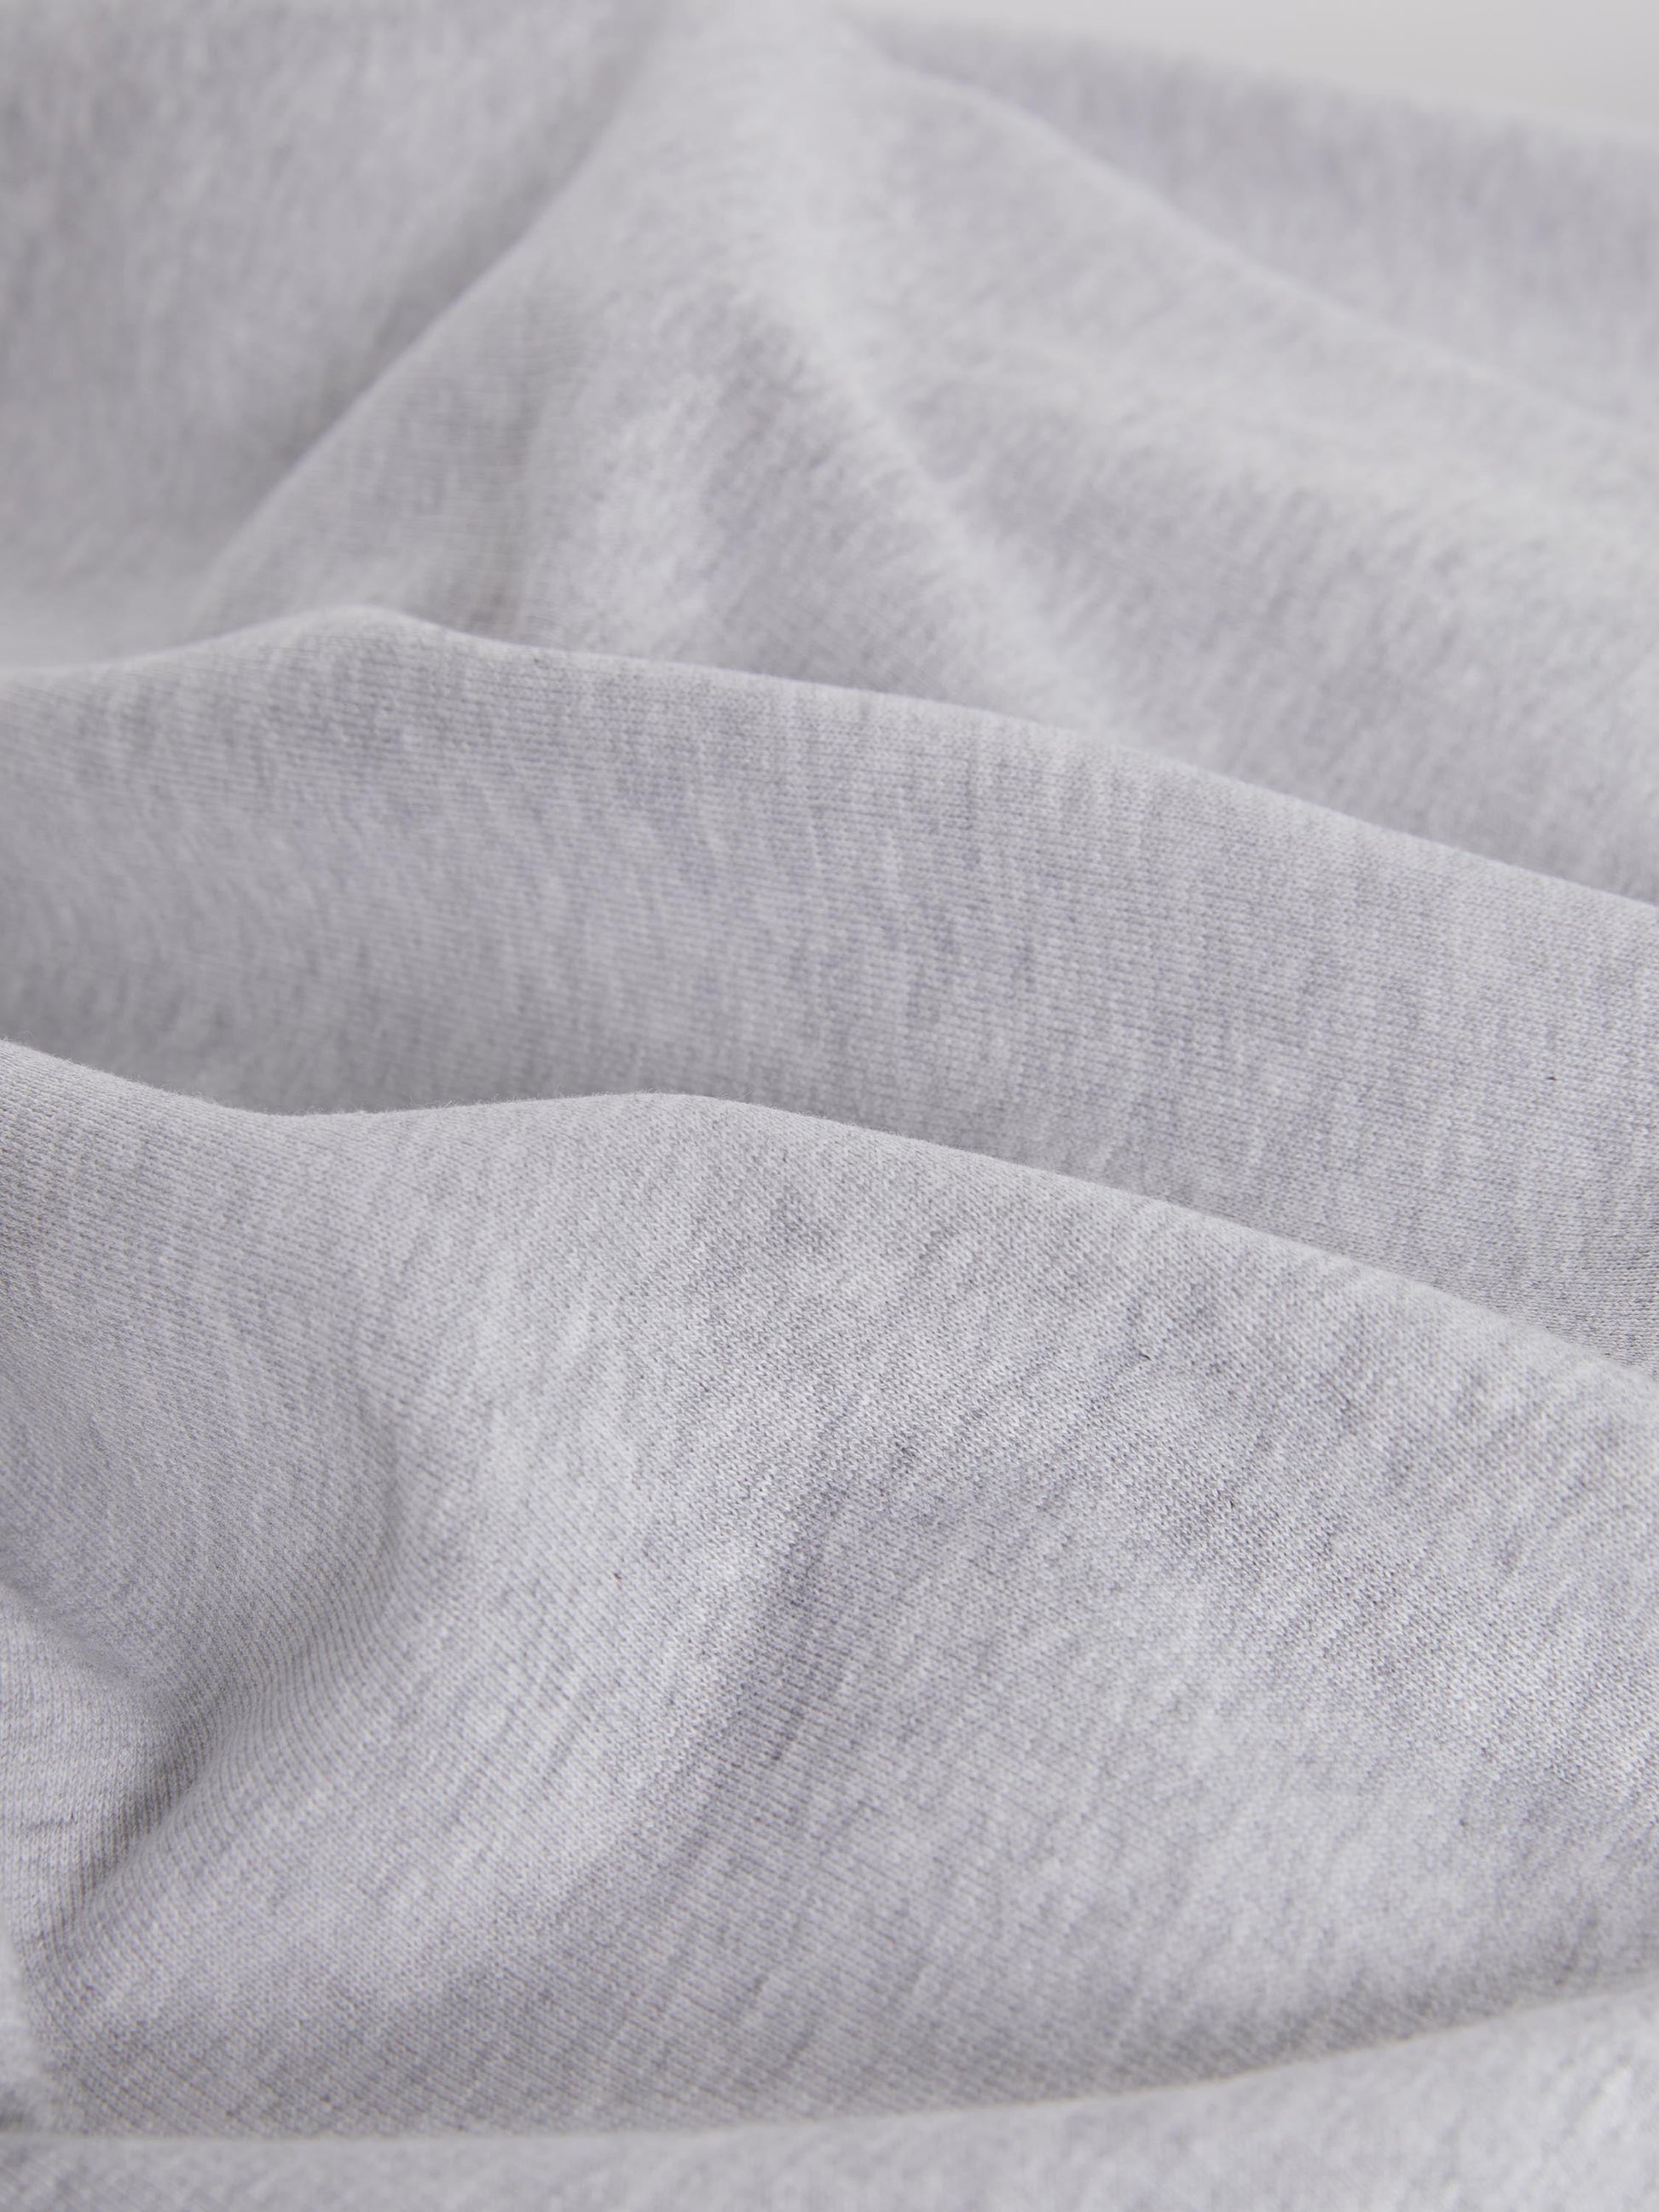 Pangaia X UN Lightweight Recycled Cotton Hoodie Grey Marl Fabric